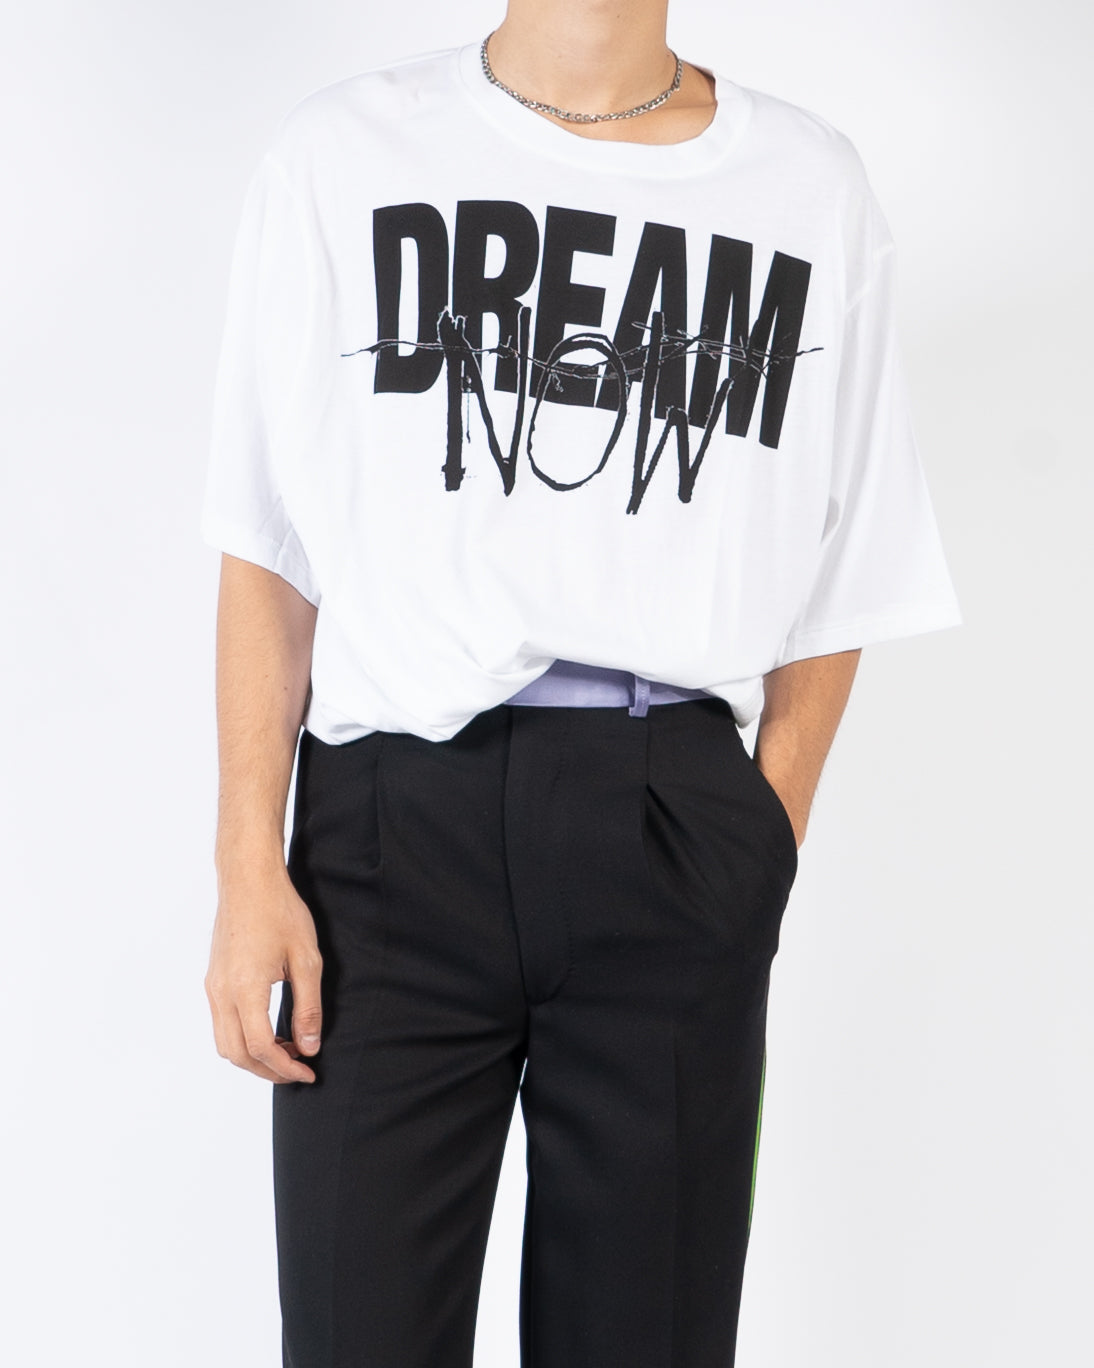 SS19 Printed T-Shirt "Dream Now" White